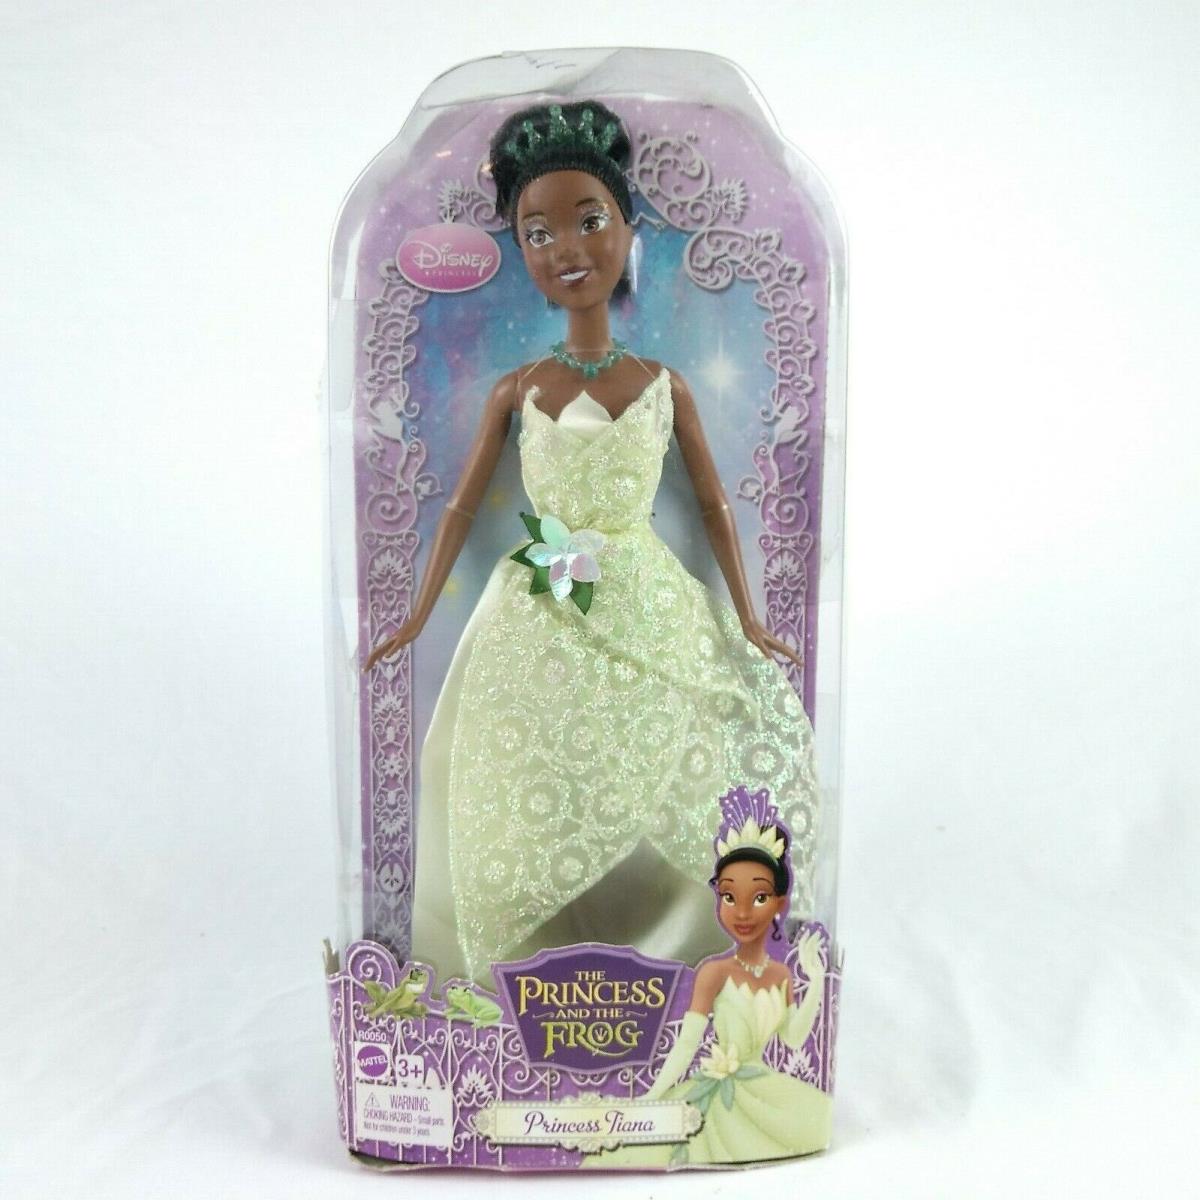 Disney Princess The Frog Tiana Doll Green Dress 2009 Mattel R0050